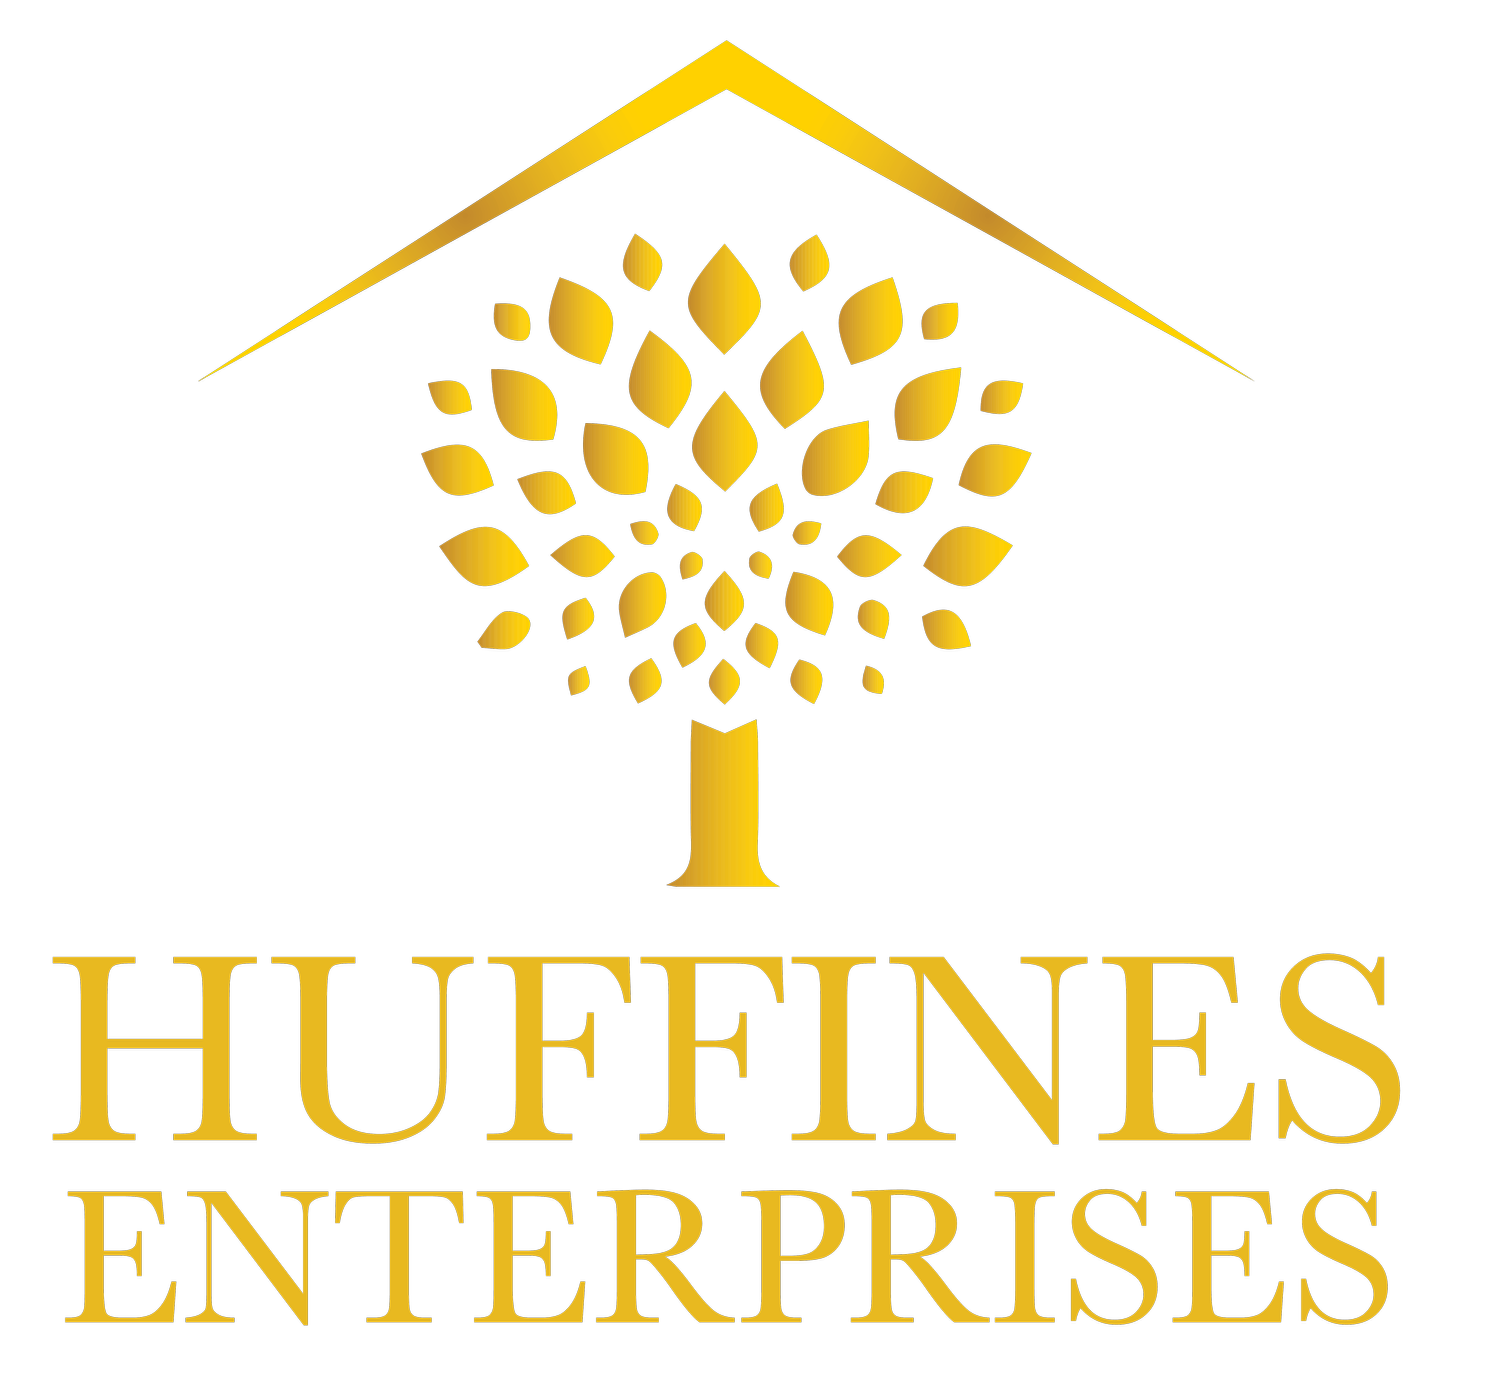 Huffines Enterprises